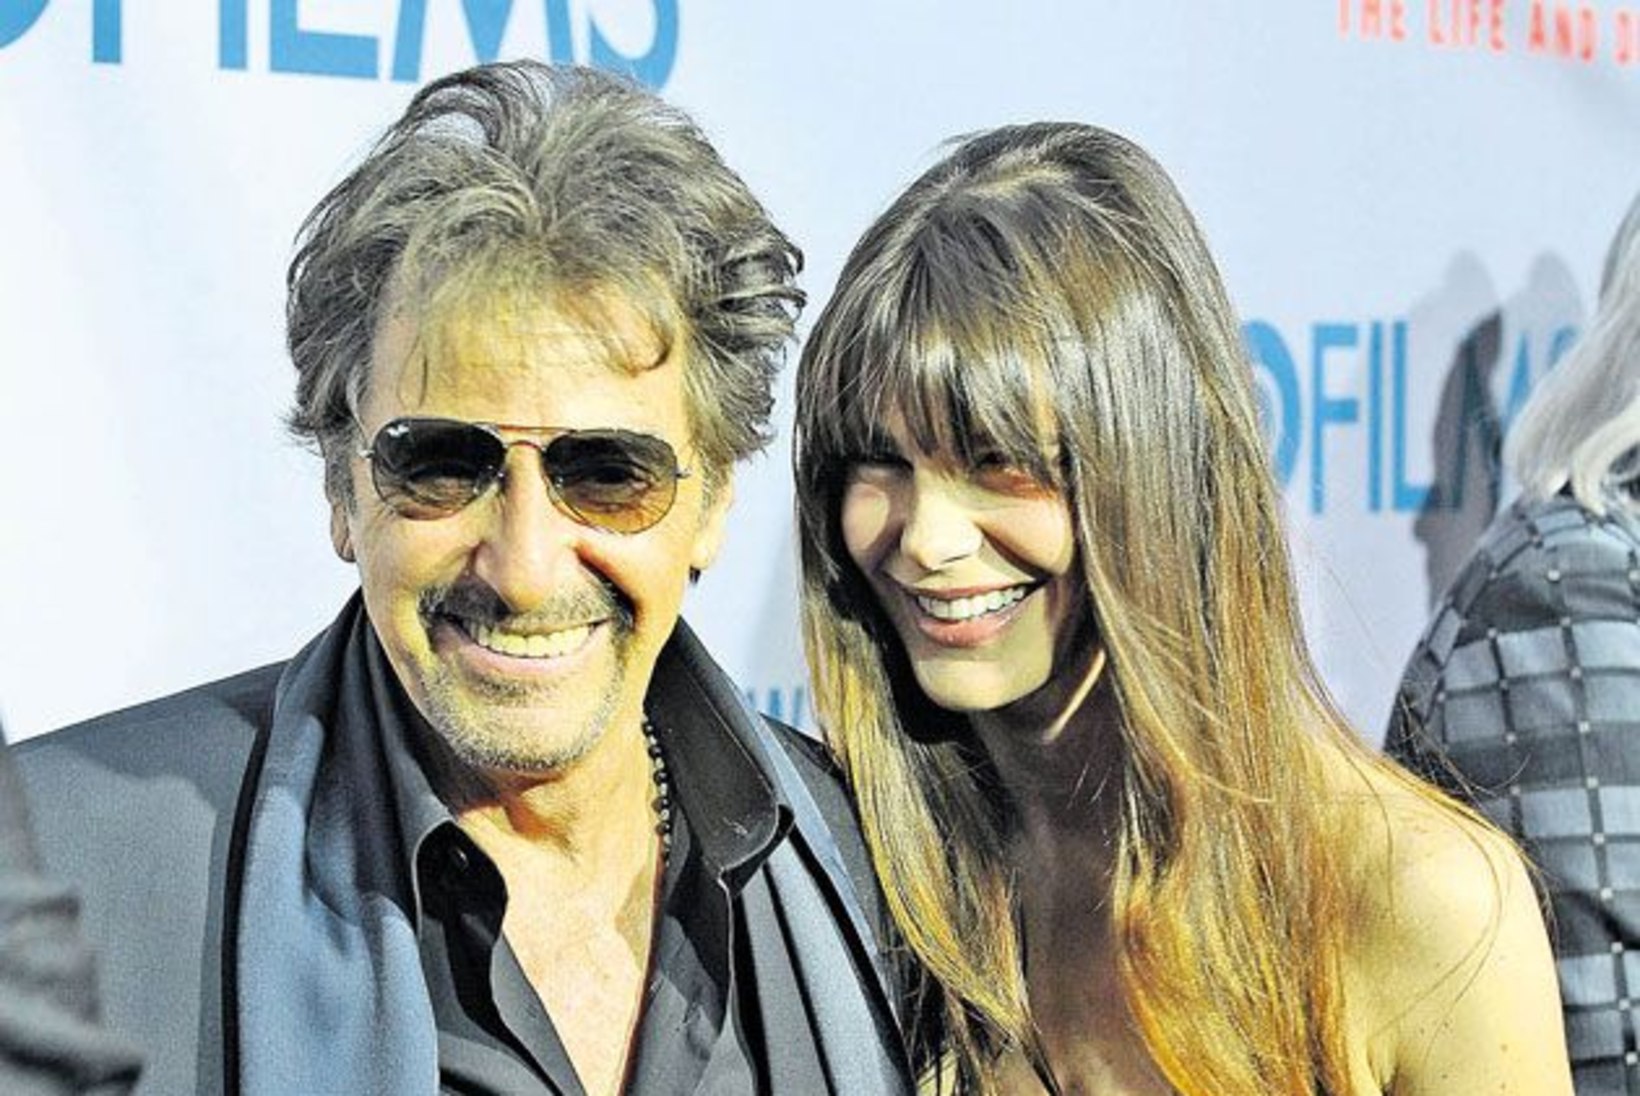 70 pole mingi vanus, alati šikk Al Pacino!